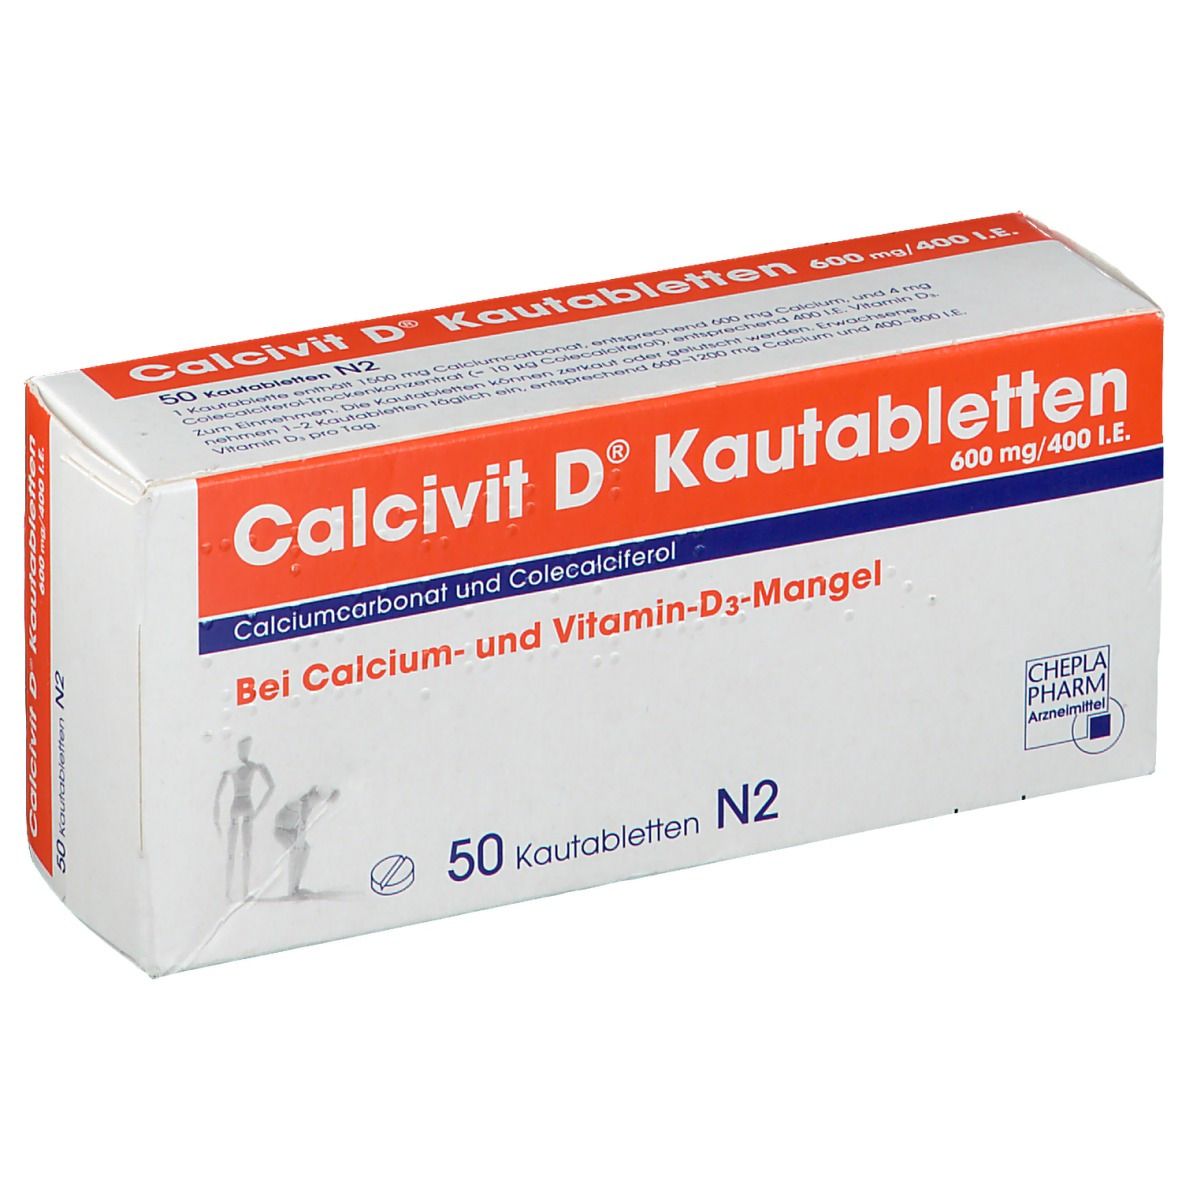 Calcivit D® Kautabletten, 600 mg/400 I.E.